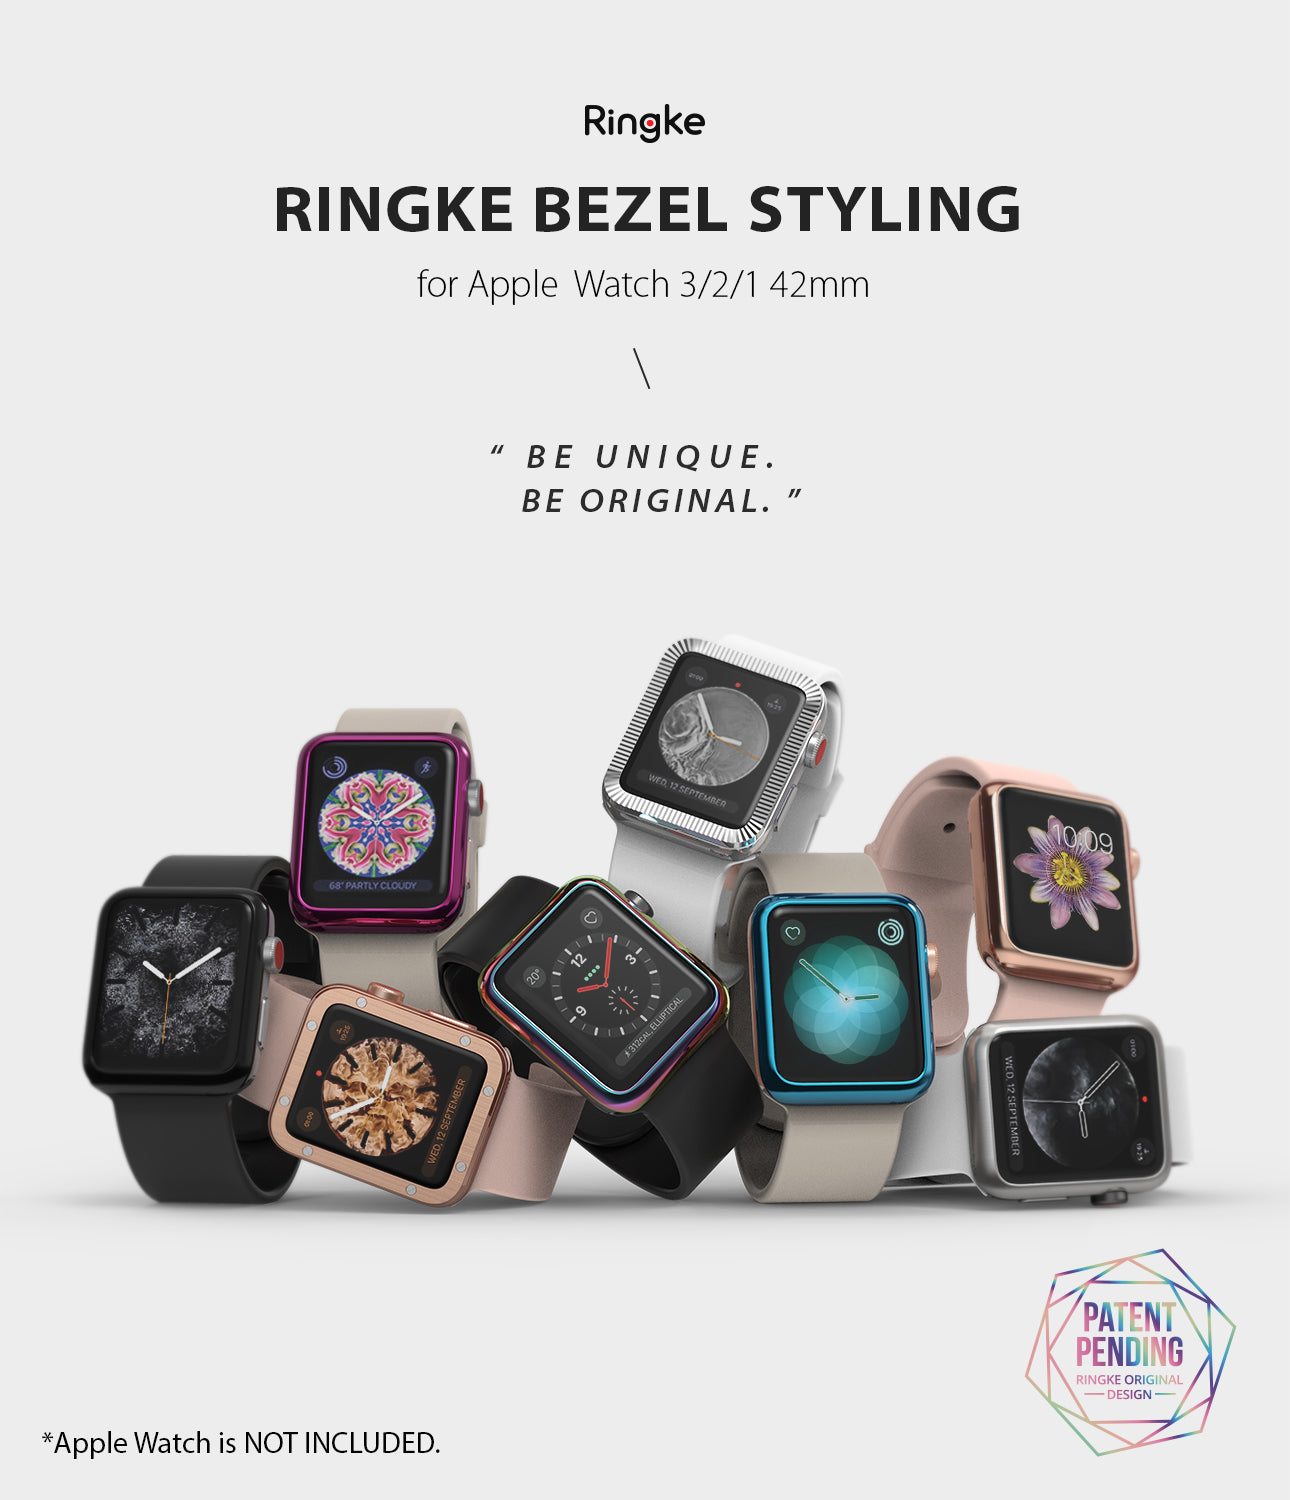 apple watch 3 2 1 42mm case ringke bezel styling stainless steel frame cover 42-05